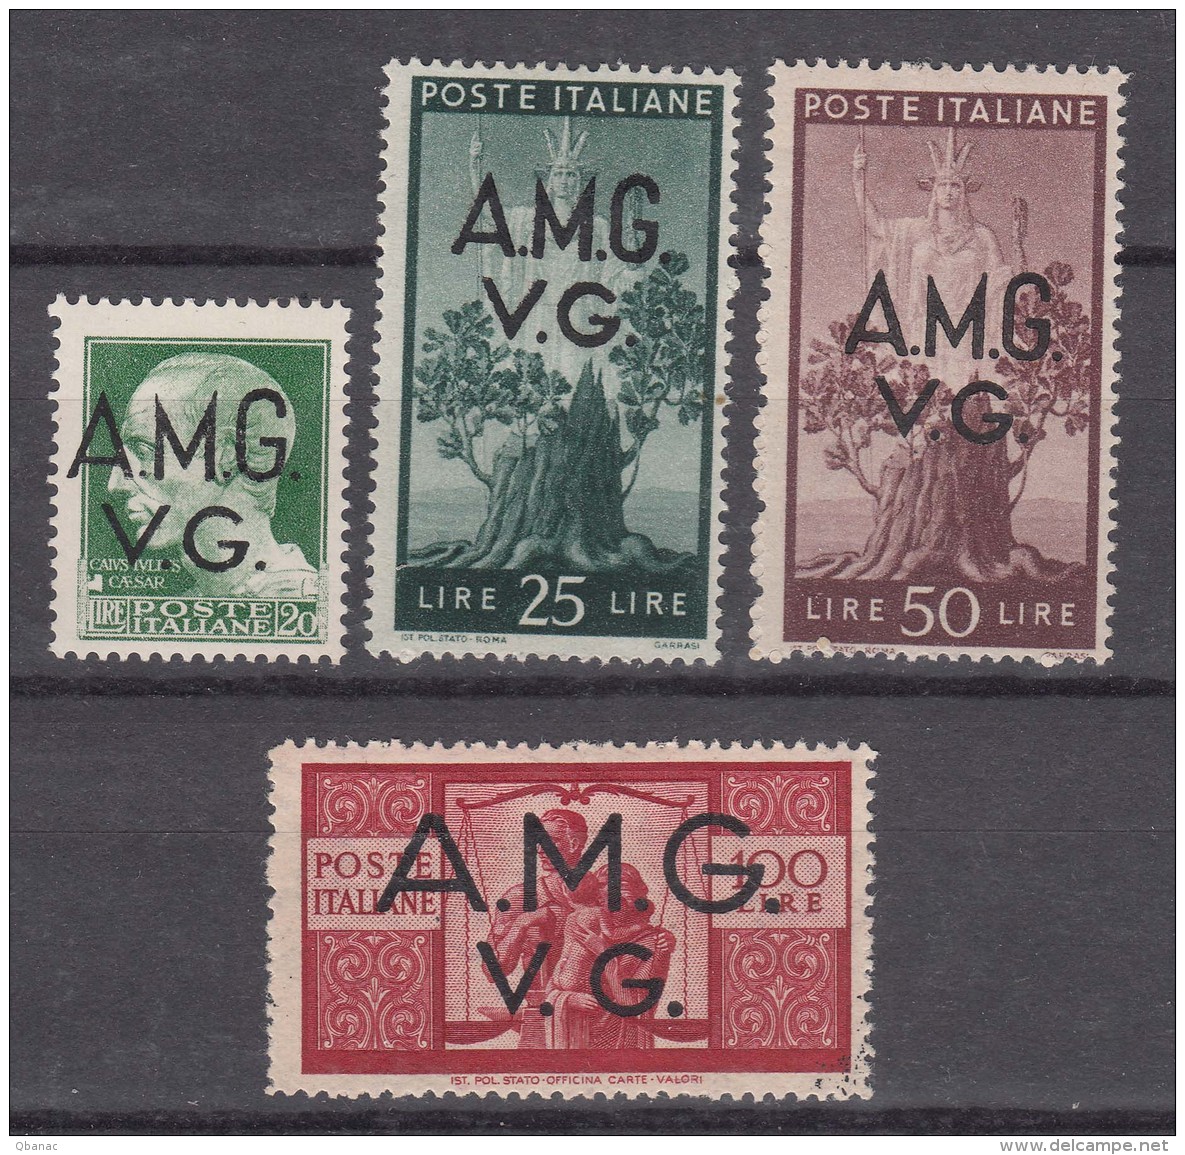 Italy Trieste, Venezia Giulia A.M.G.-V.G. Sassone#12,19,20,21 Mint Hinged - Mint/hinged